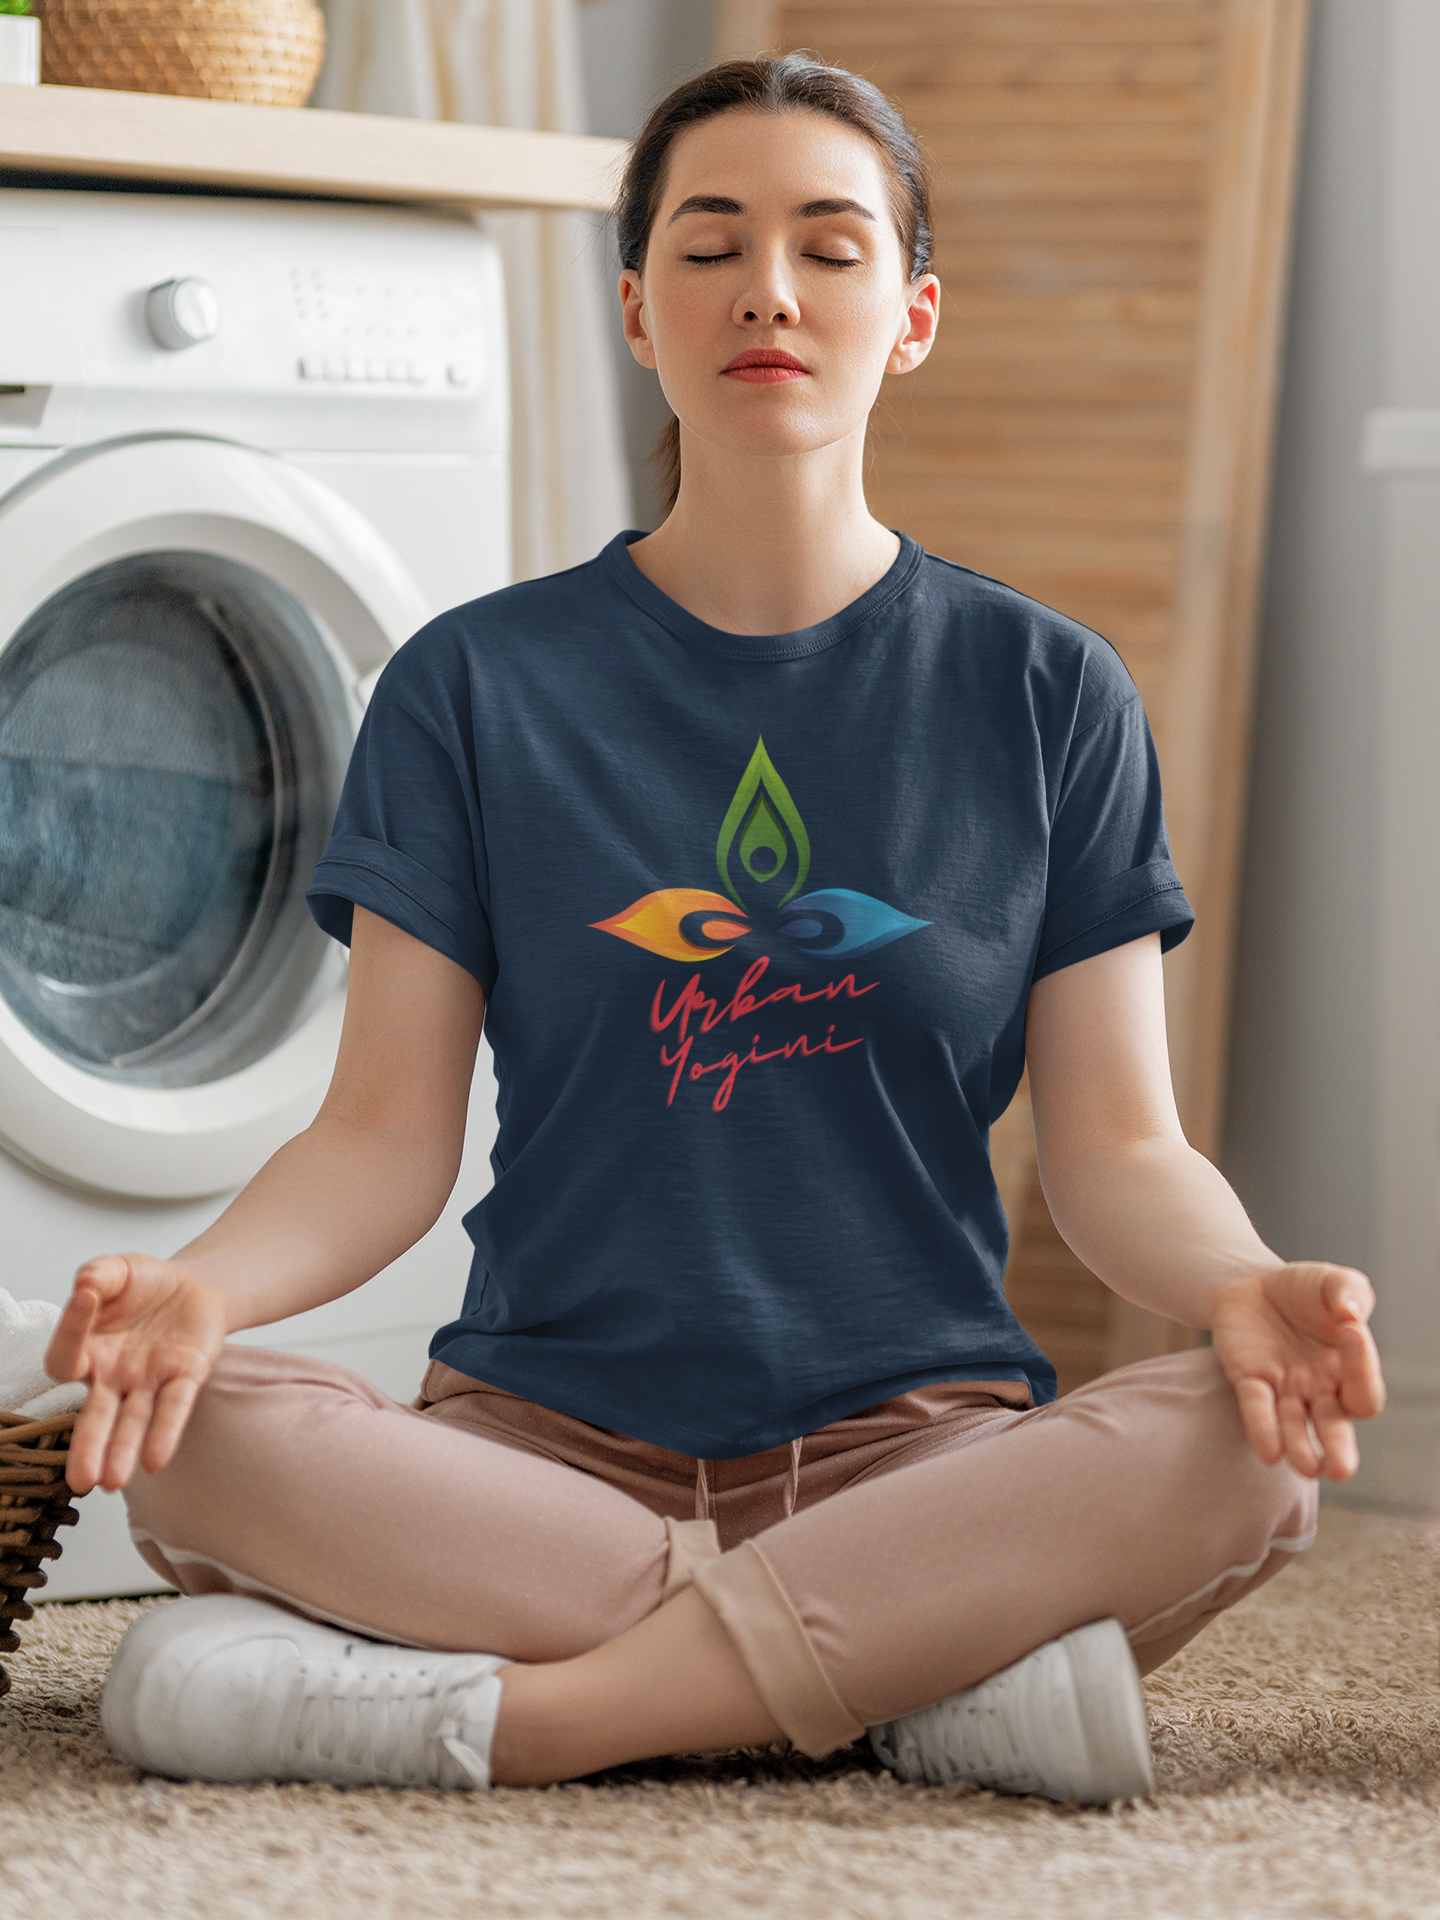 Urban Yogini Women's Yoga T-shirt Navy Blue